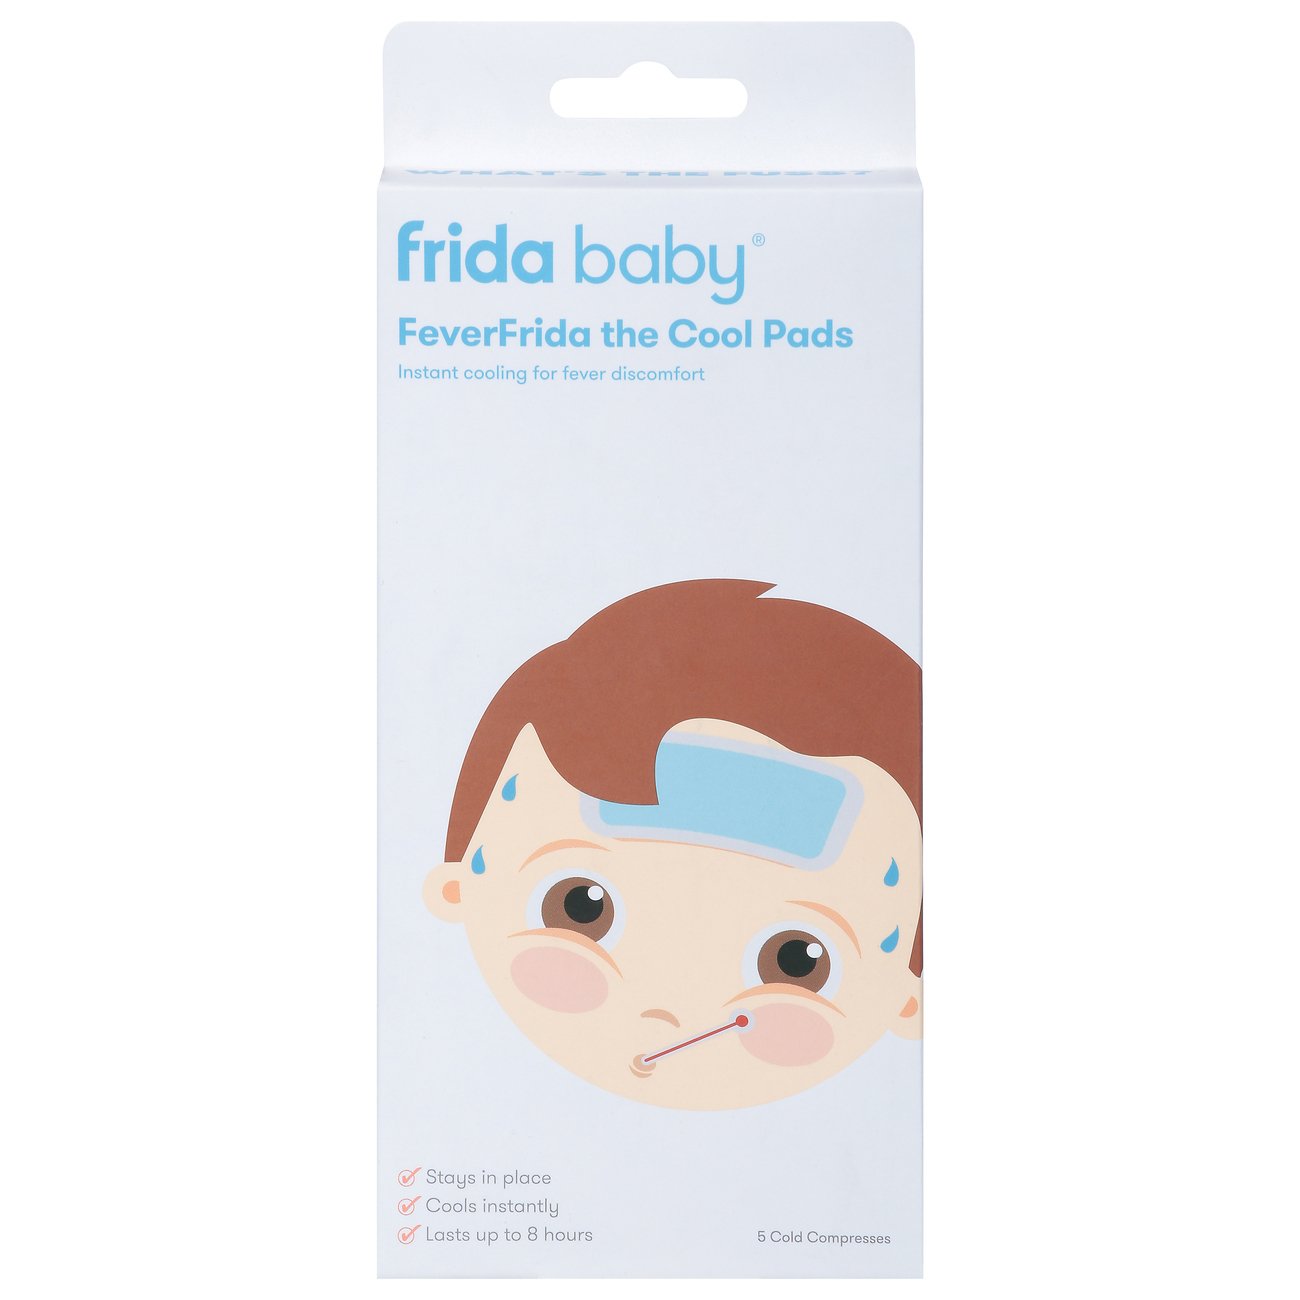 Fridababy FeverFrida Cool Pads